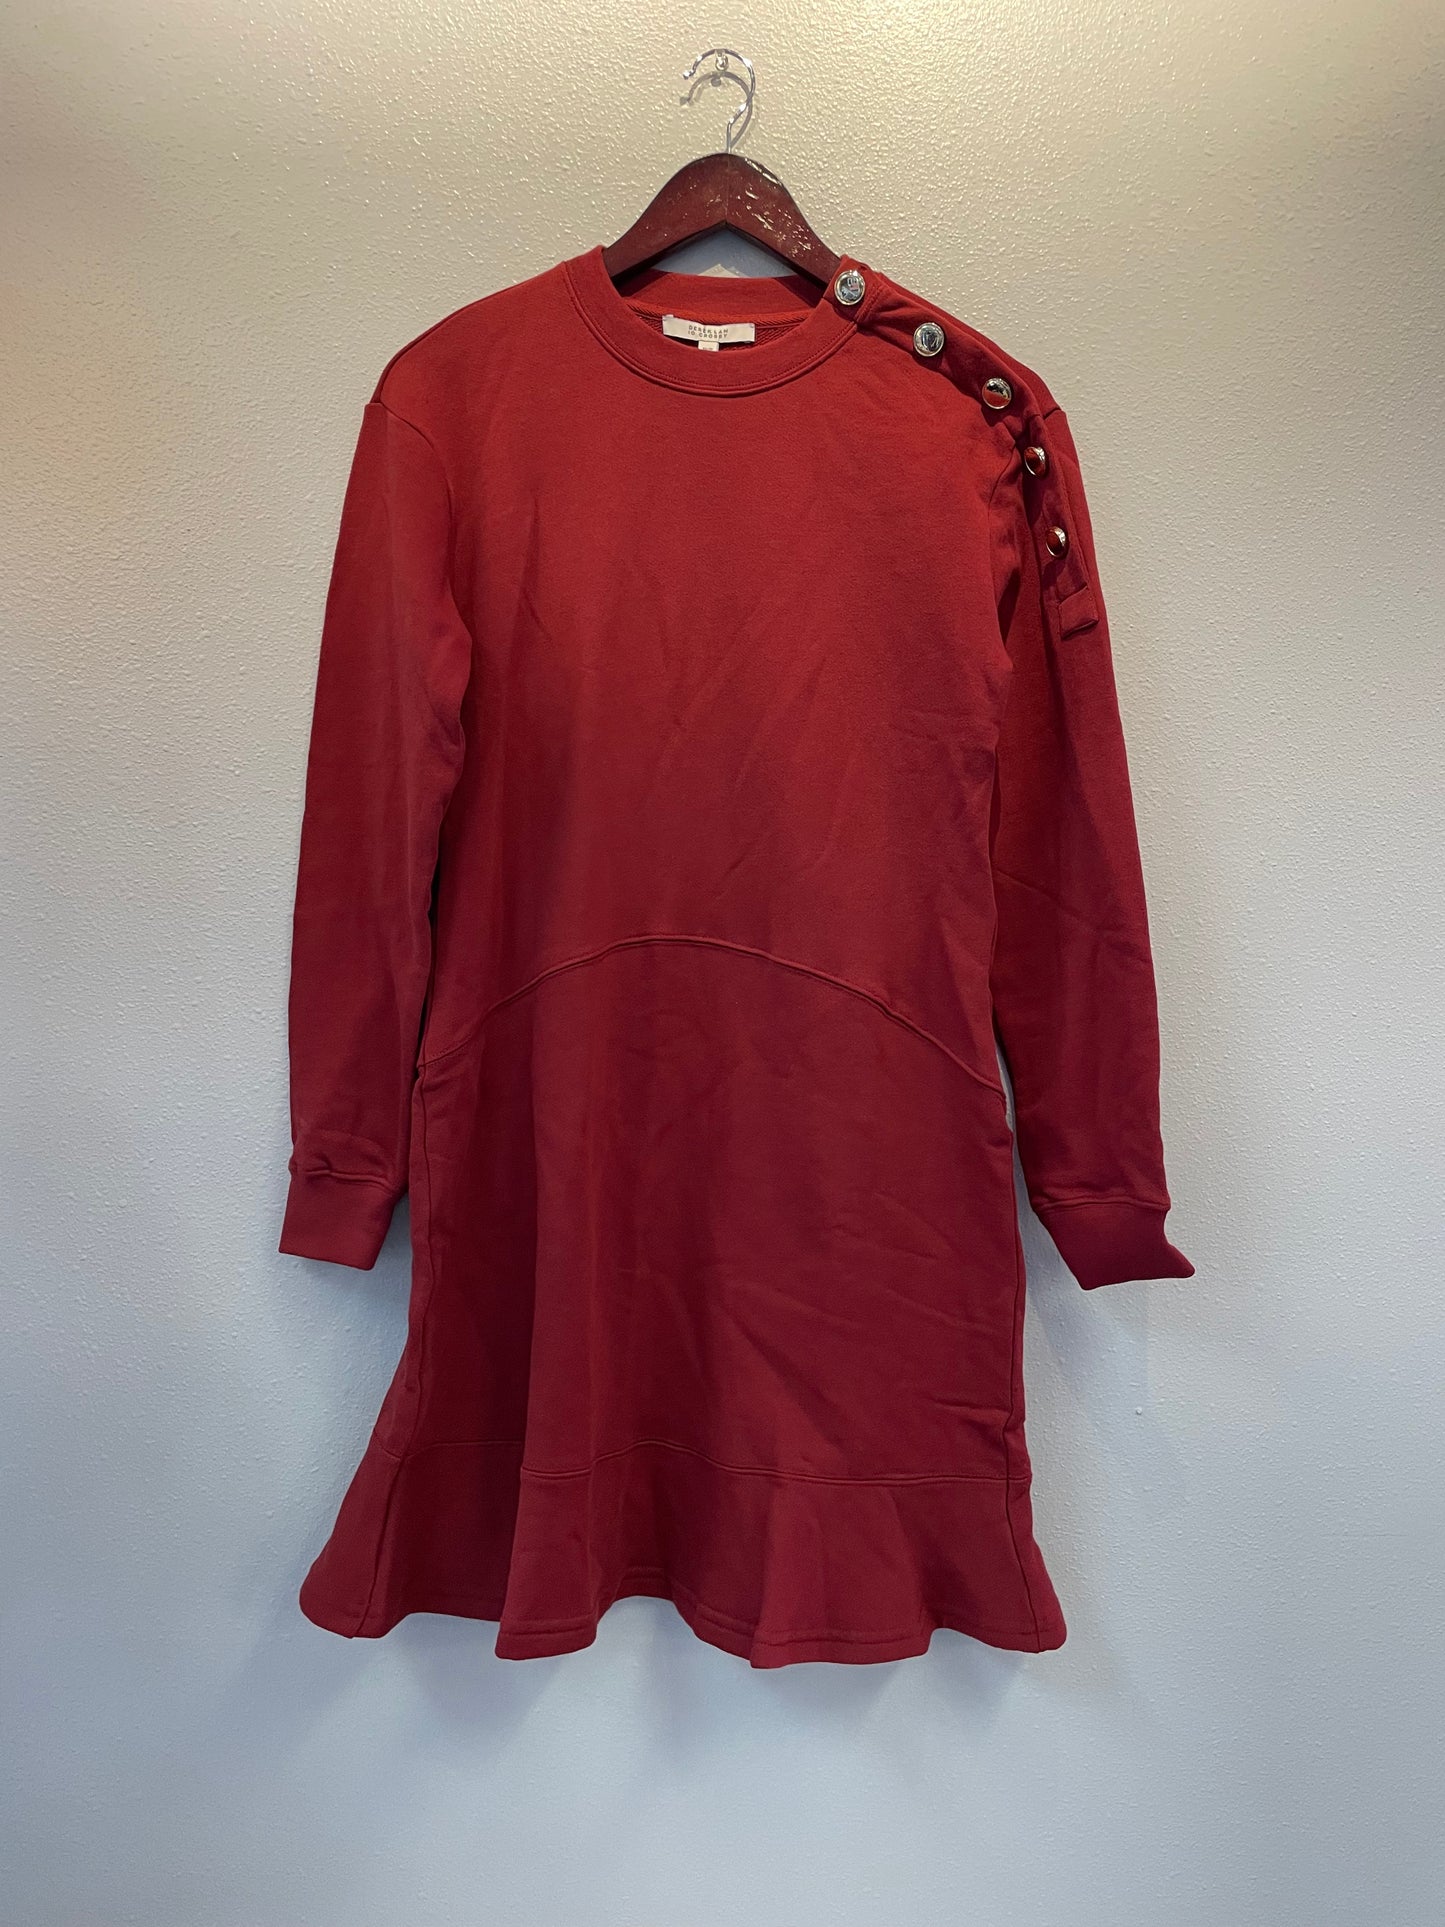 Derek Lam 10 Crosby "Camden Button Sweatshirt" Dress